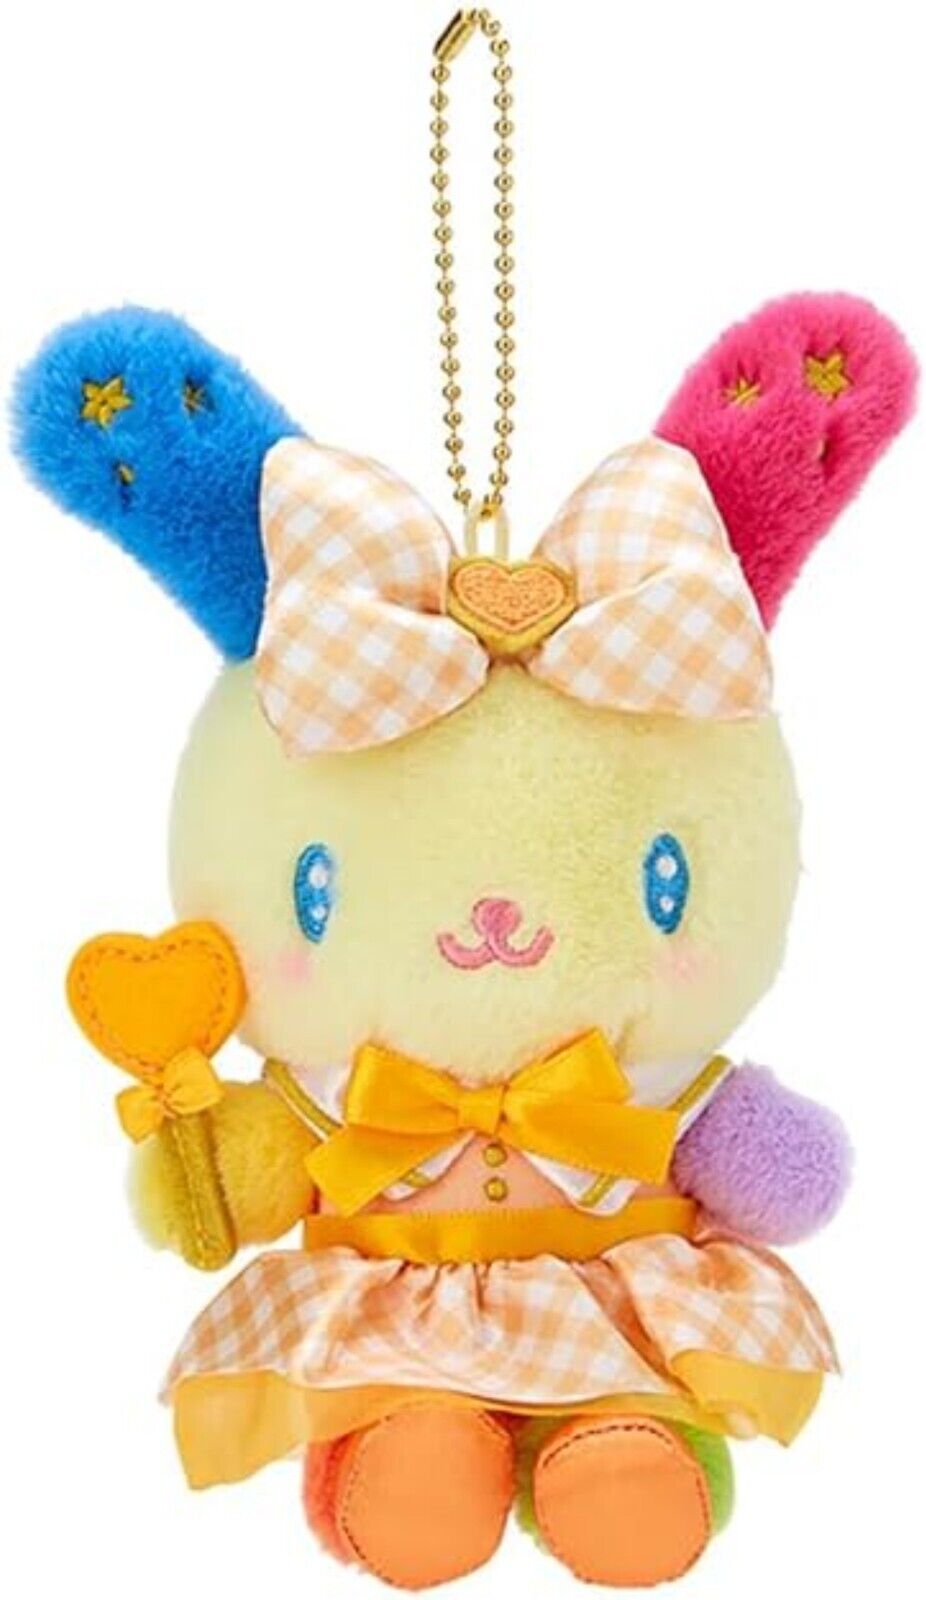 Sanrio Character Usahana Mascot Chain (Like Even More) Plush Doll New Japan